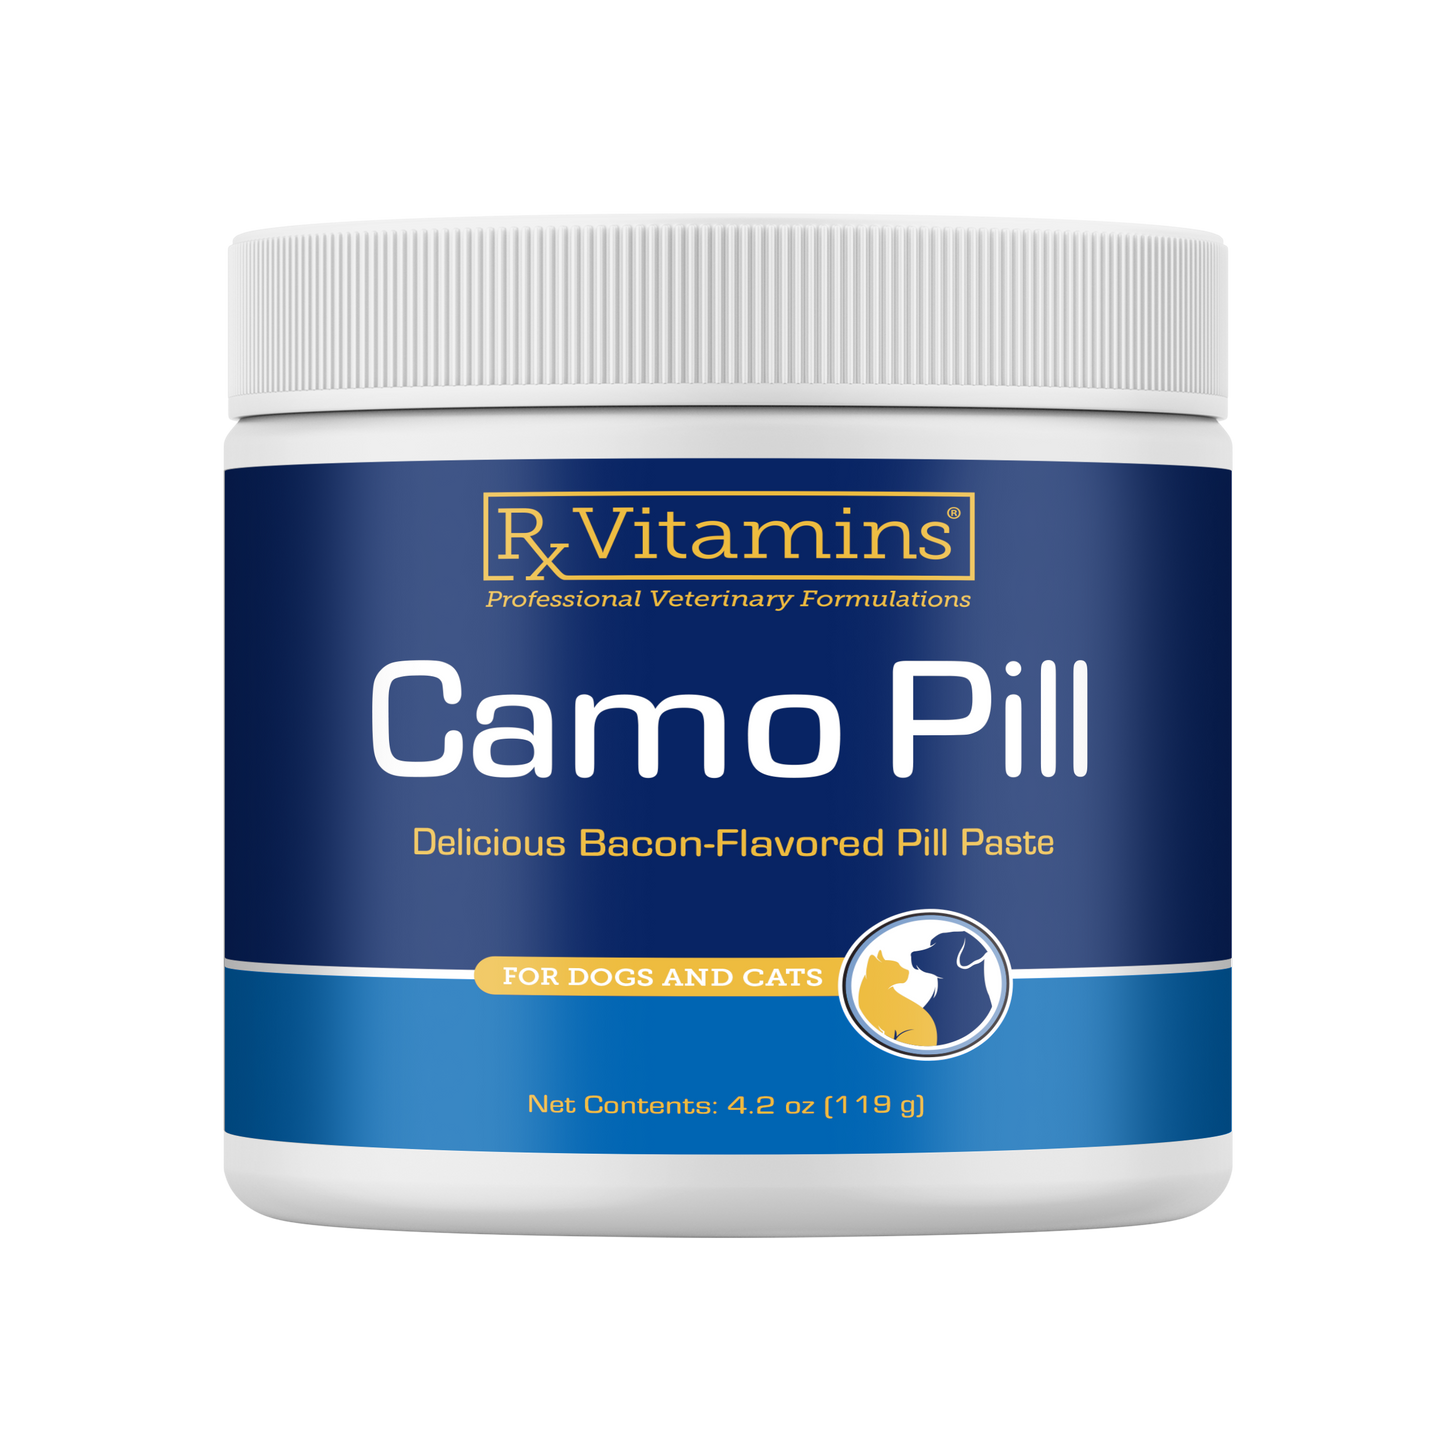 Camo Pill